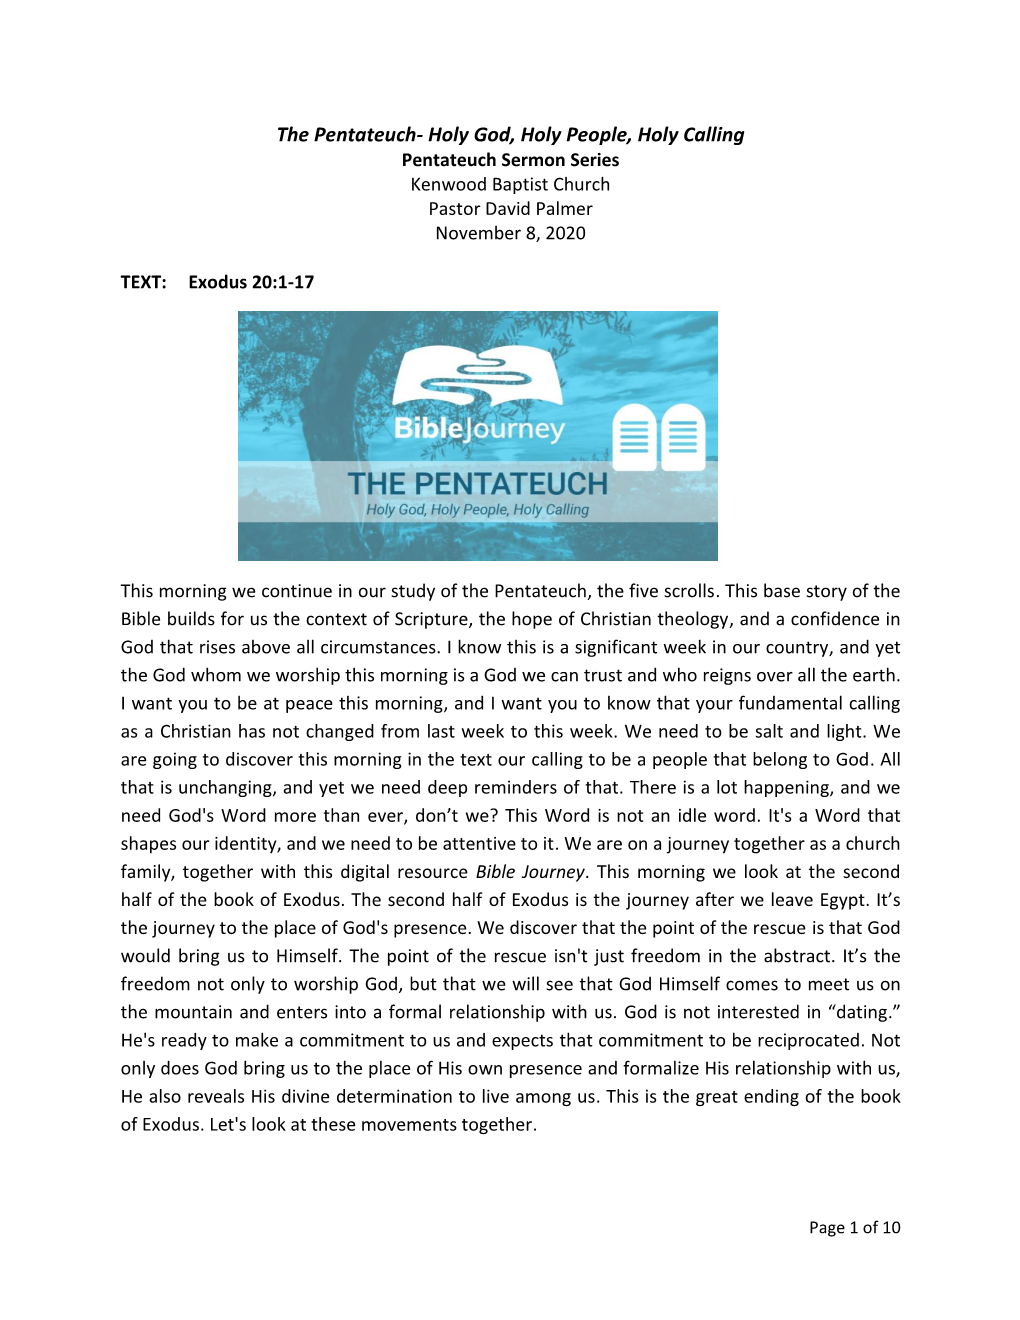 The Pentateuch- Holy God, Holy People, Holy Calling Pentateuch Sermon Series Kenwood Baptist Church Pastor David Palmer November 8, 2020